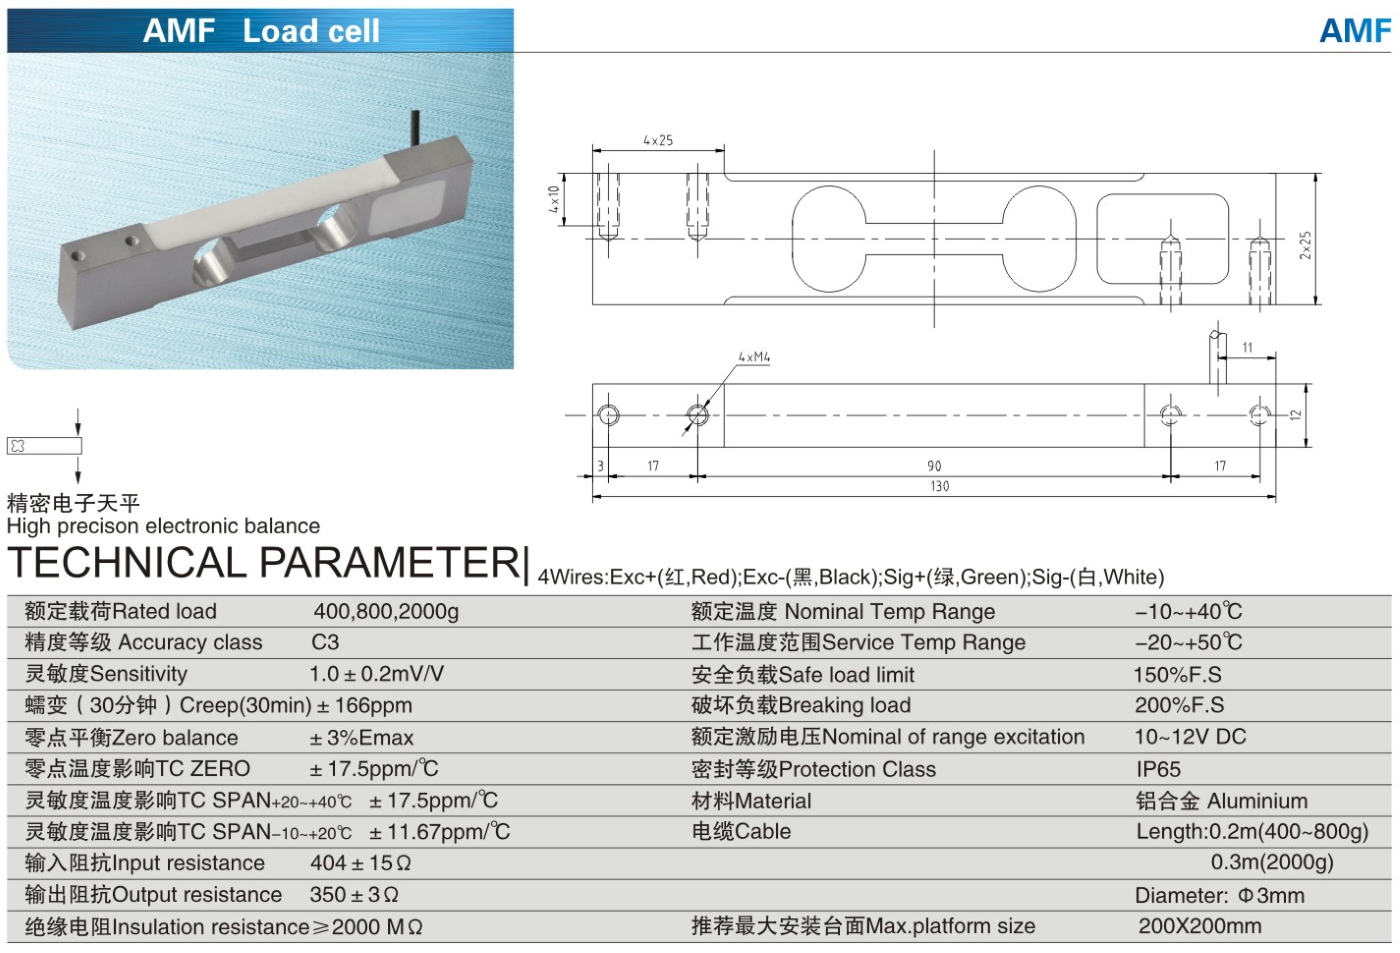 img/loadcell-images/aluminium-singlepoint/KELI_AMF_Loadcell-TTM_Teknoloji.jpg